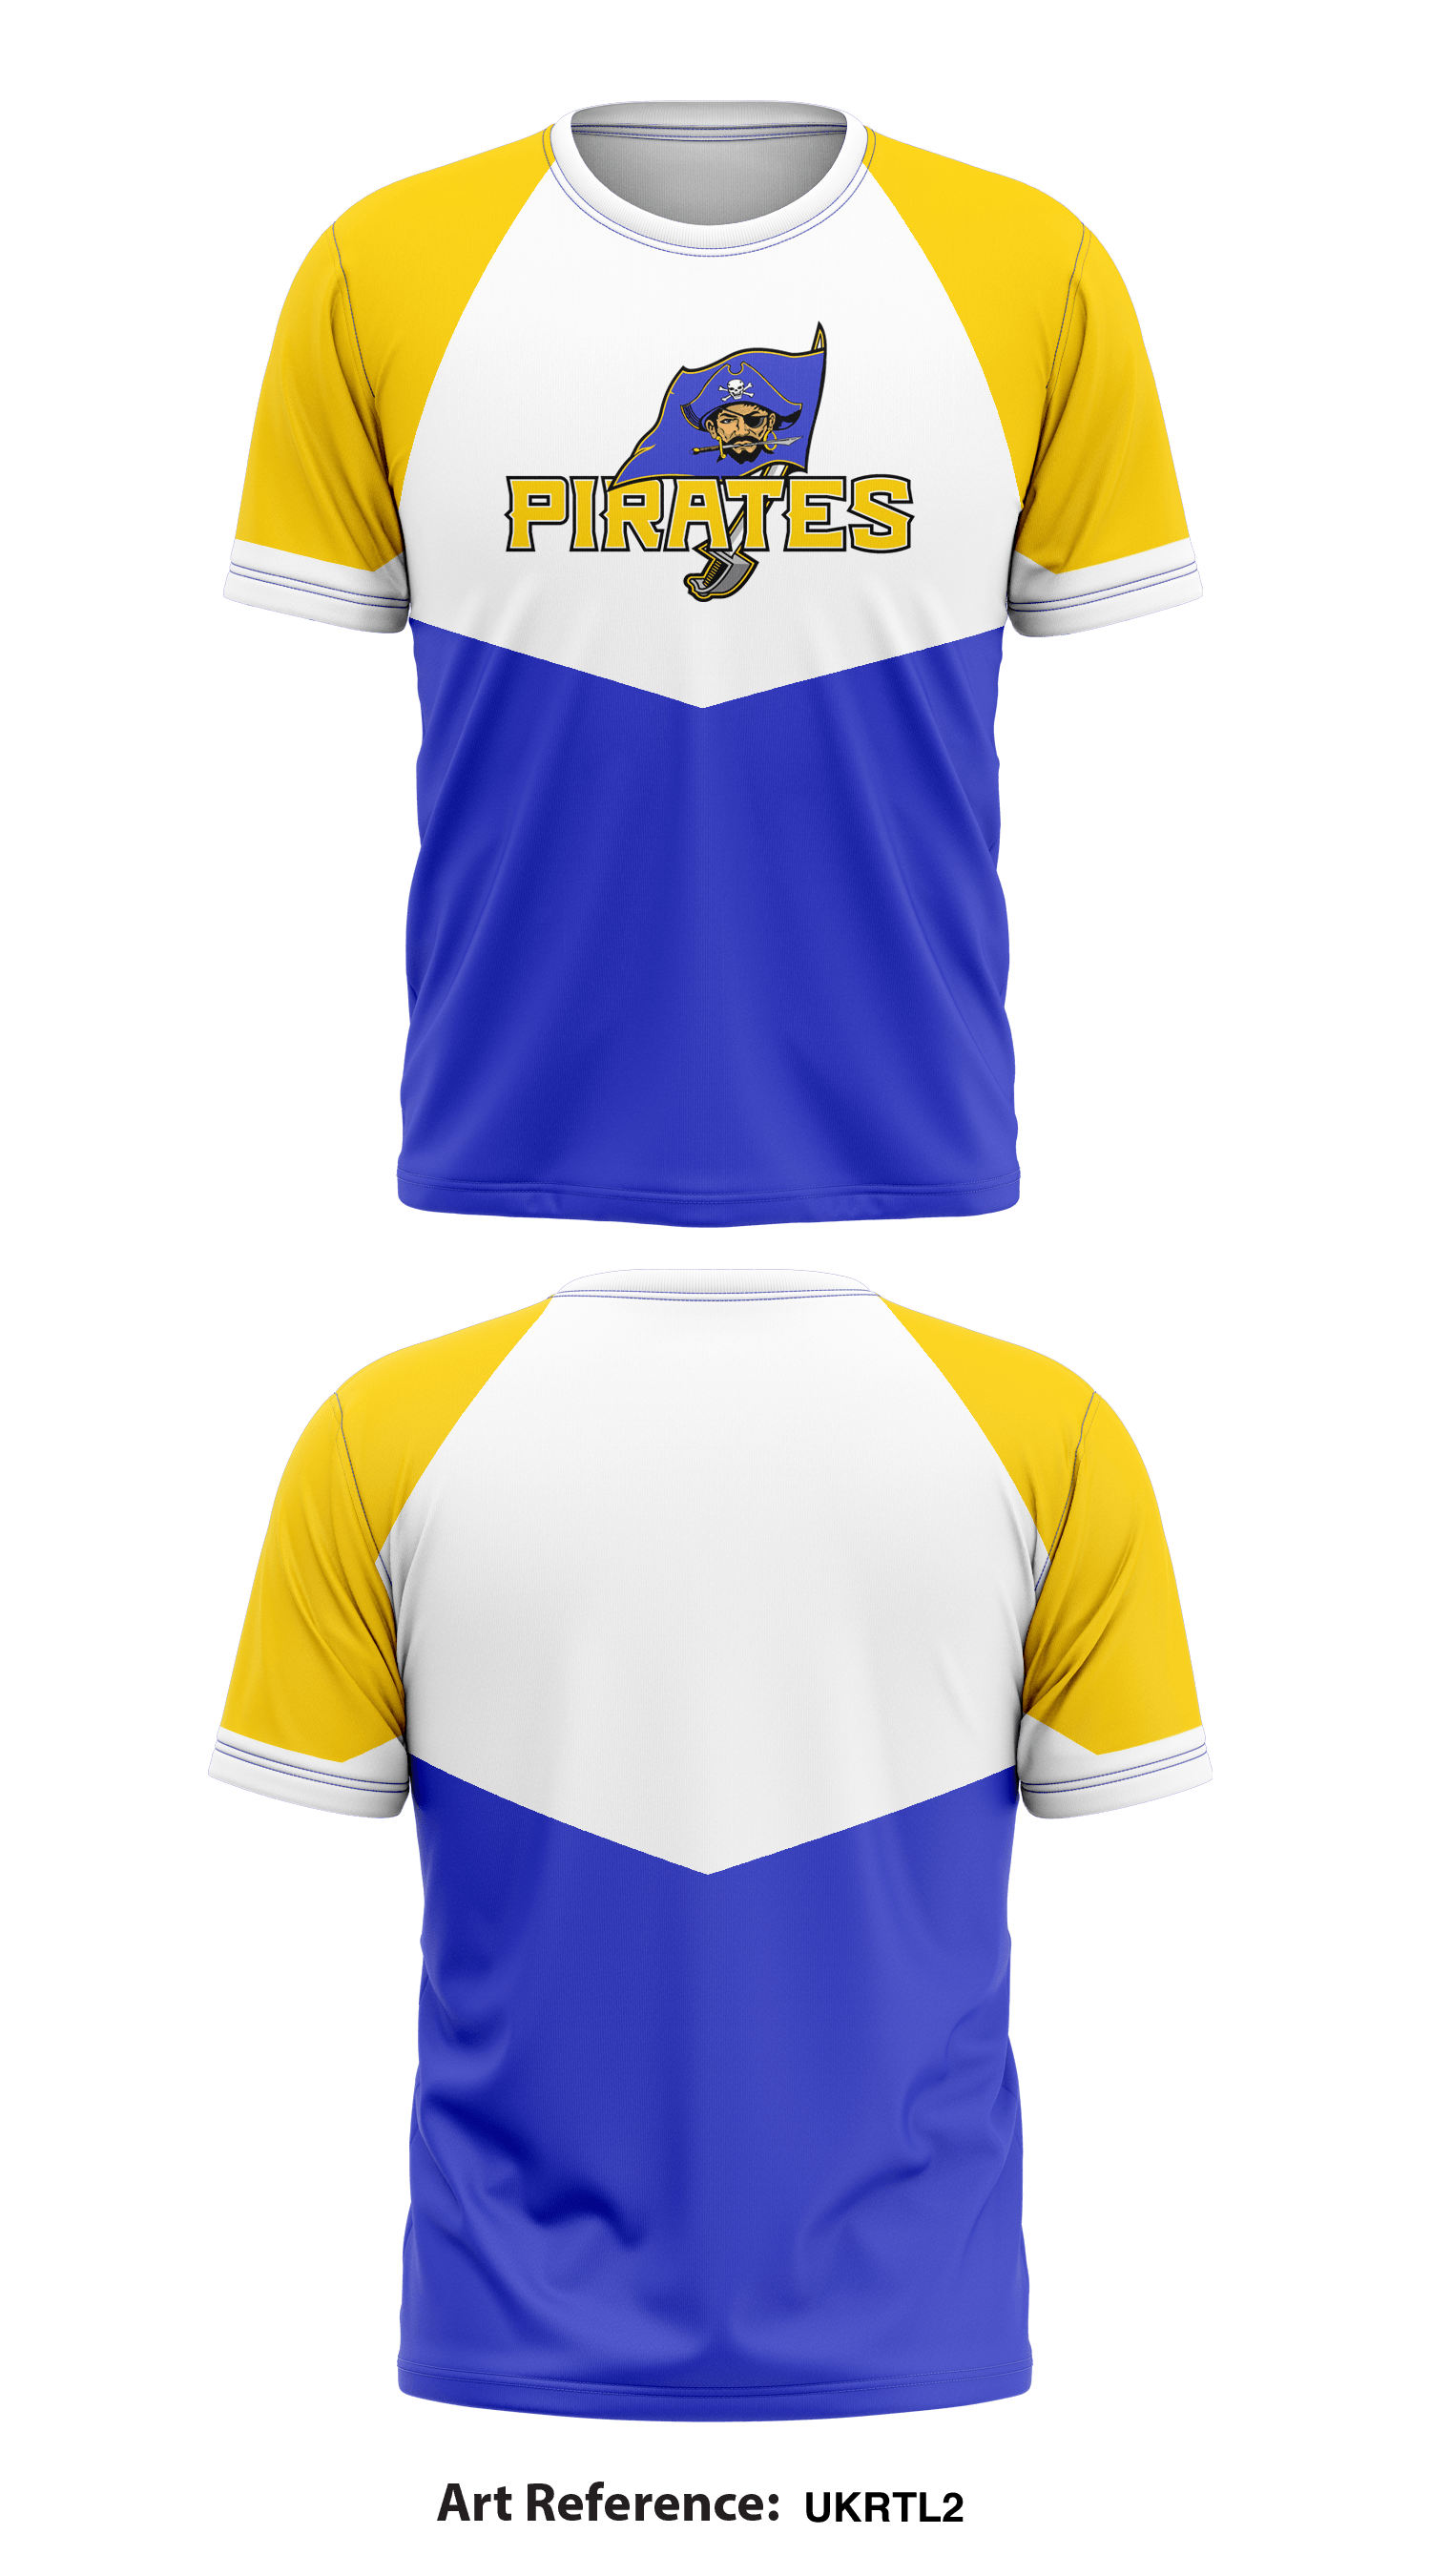 Retro Football Jersey Soccer Jersey Uniform Blue Yellow Designs